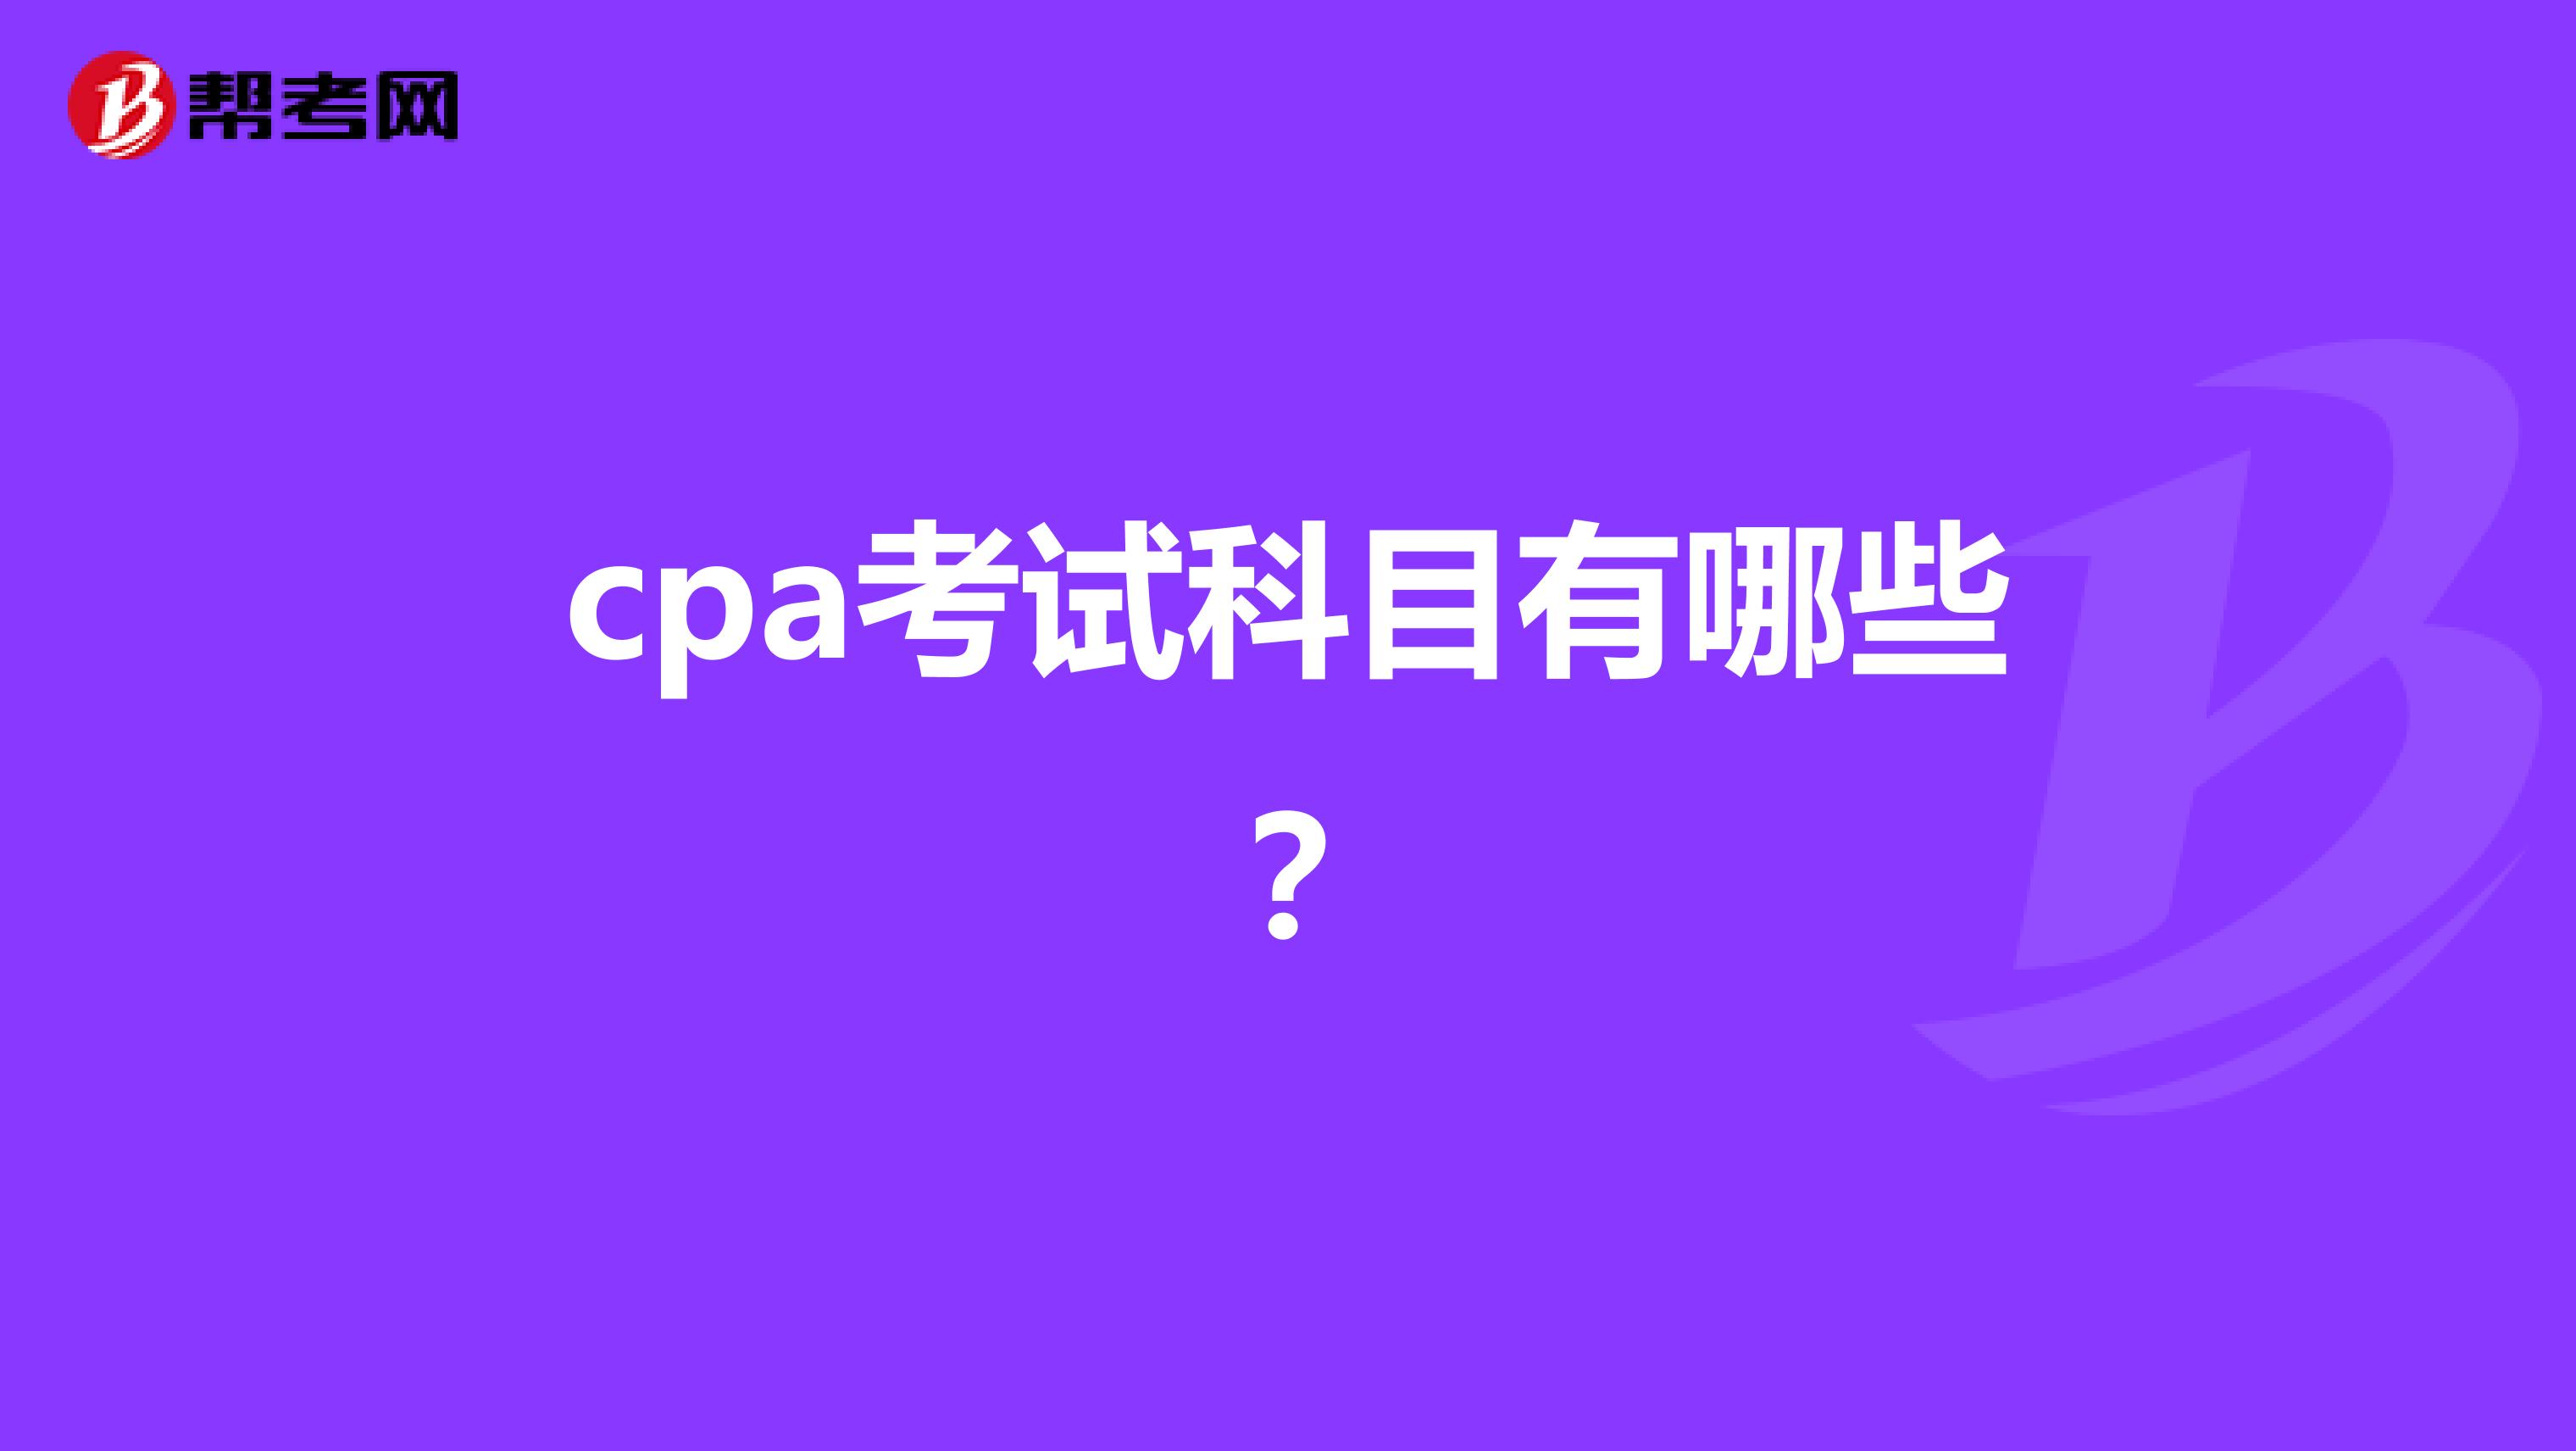 cpa考试科目有哪些？